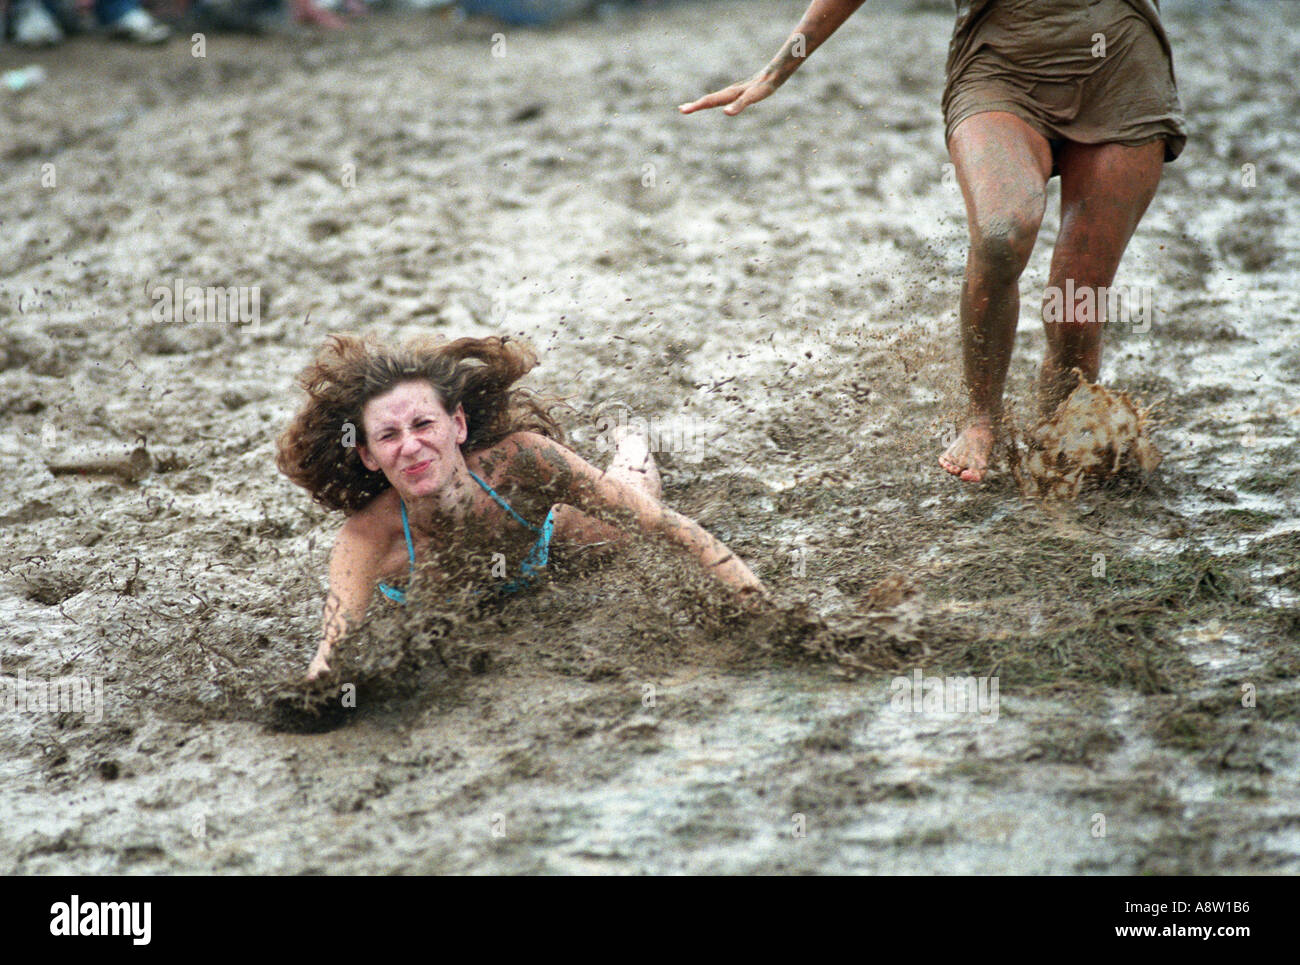 Humor fall Woodstock music festival 1994 Woman falling in mud sliding down muddy hill Stock Photo